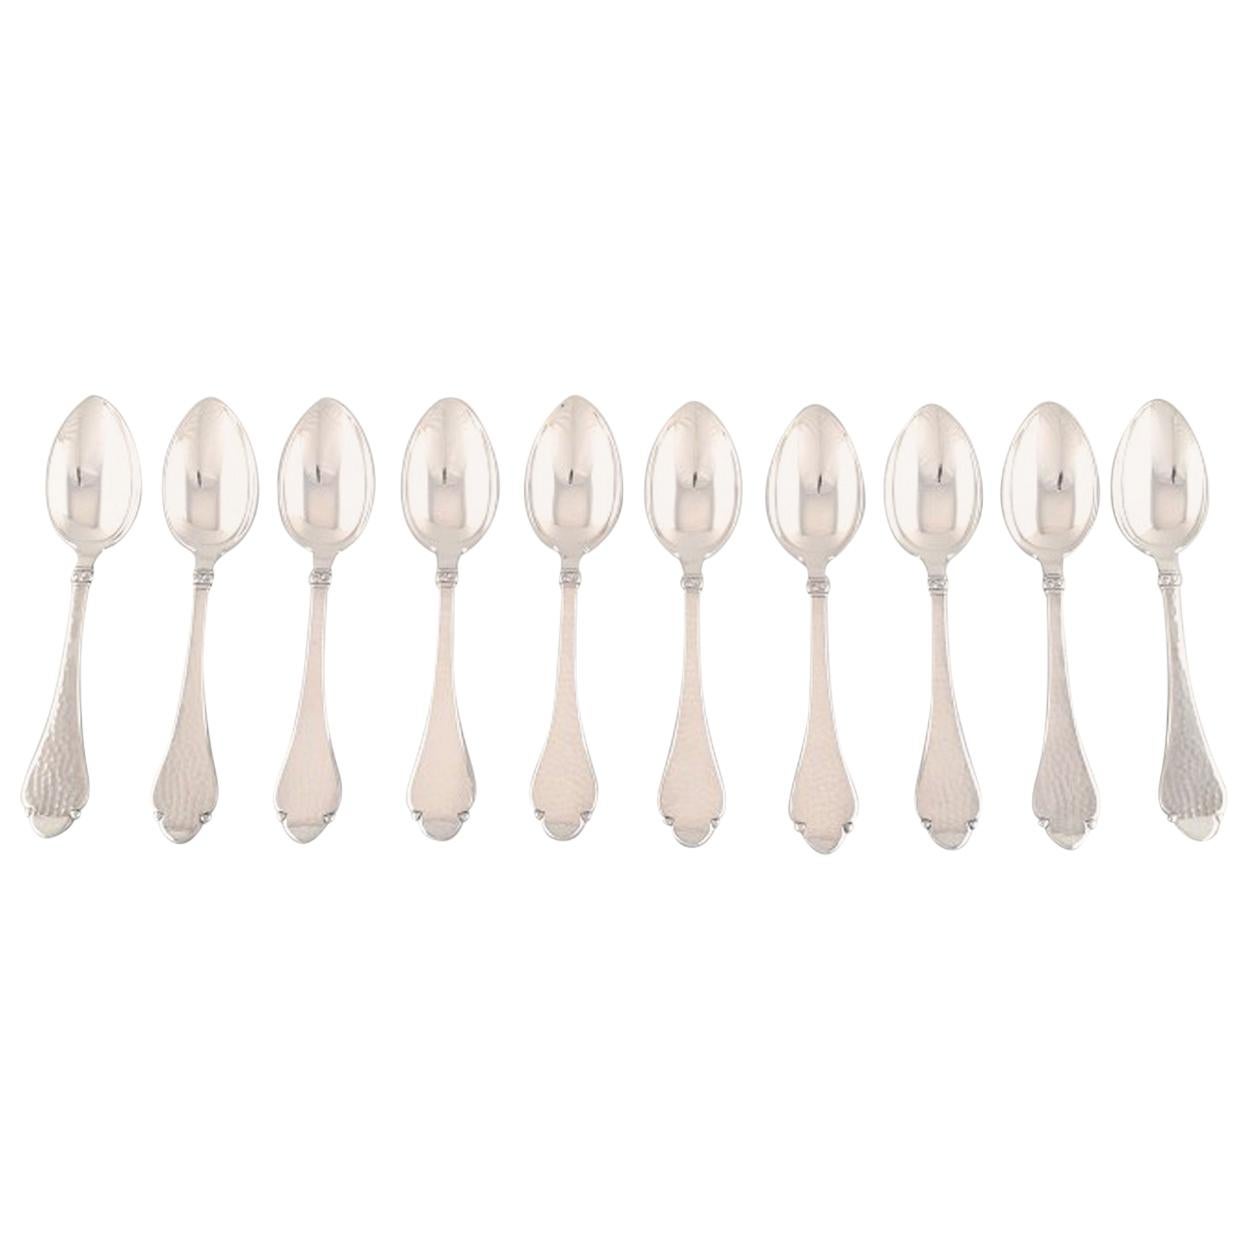 Horsens Silver, Denmark W & S Sørensen, 9 Pieces, Bernstoff Table Spoons For Sale